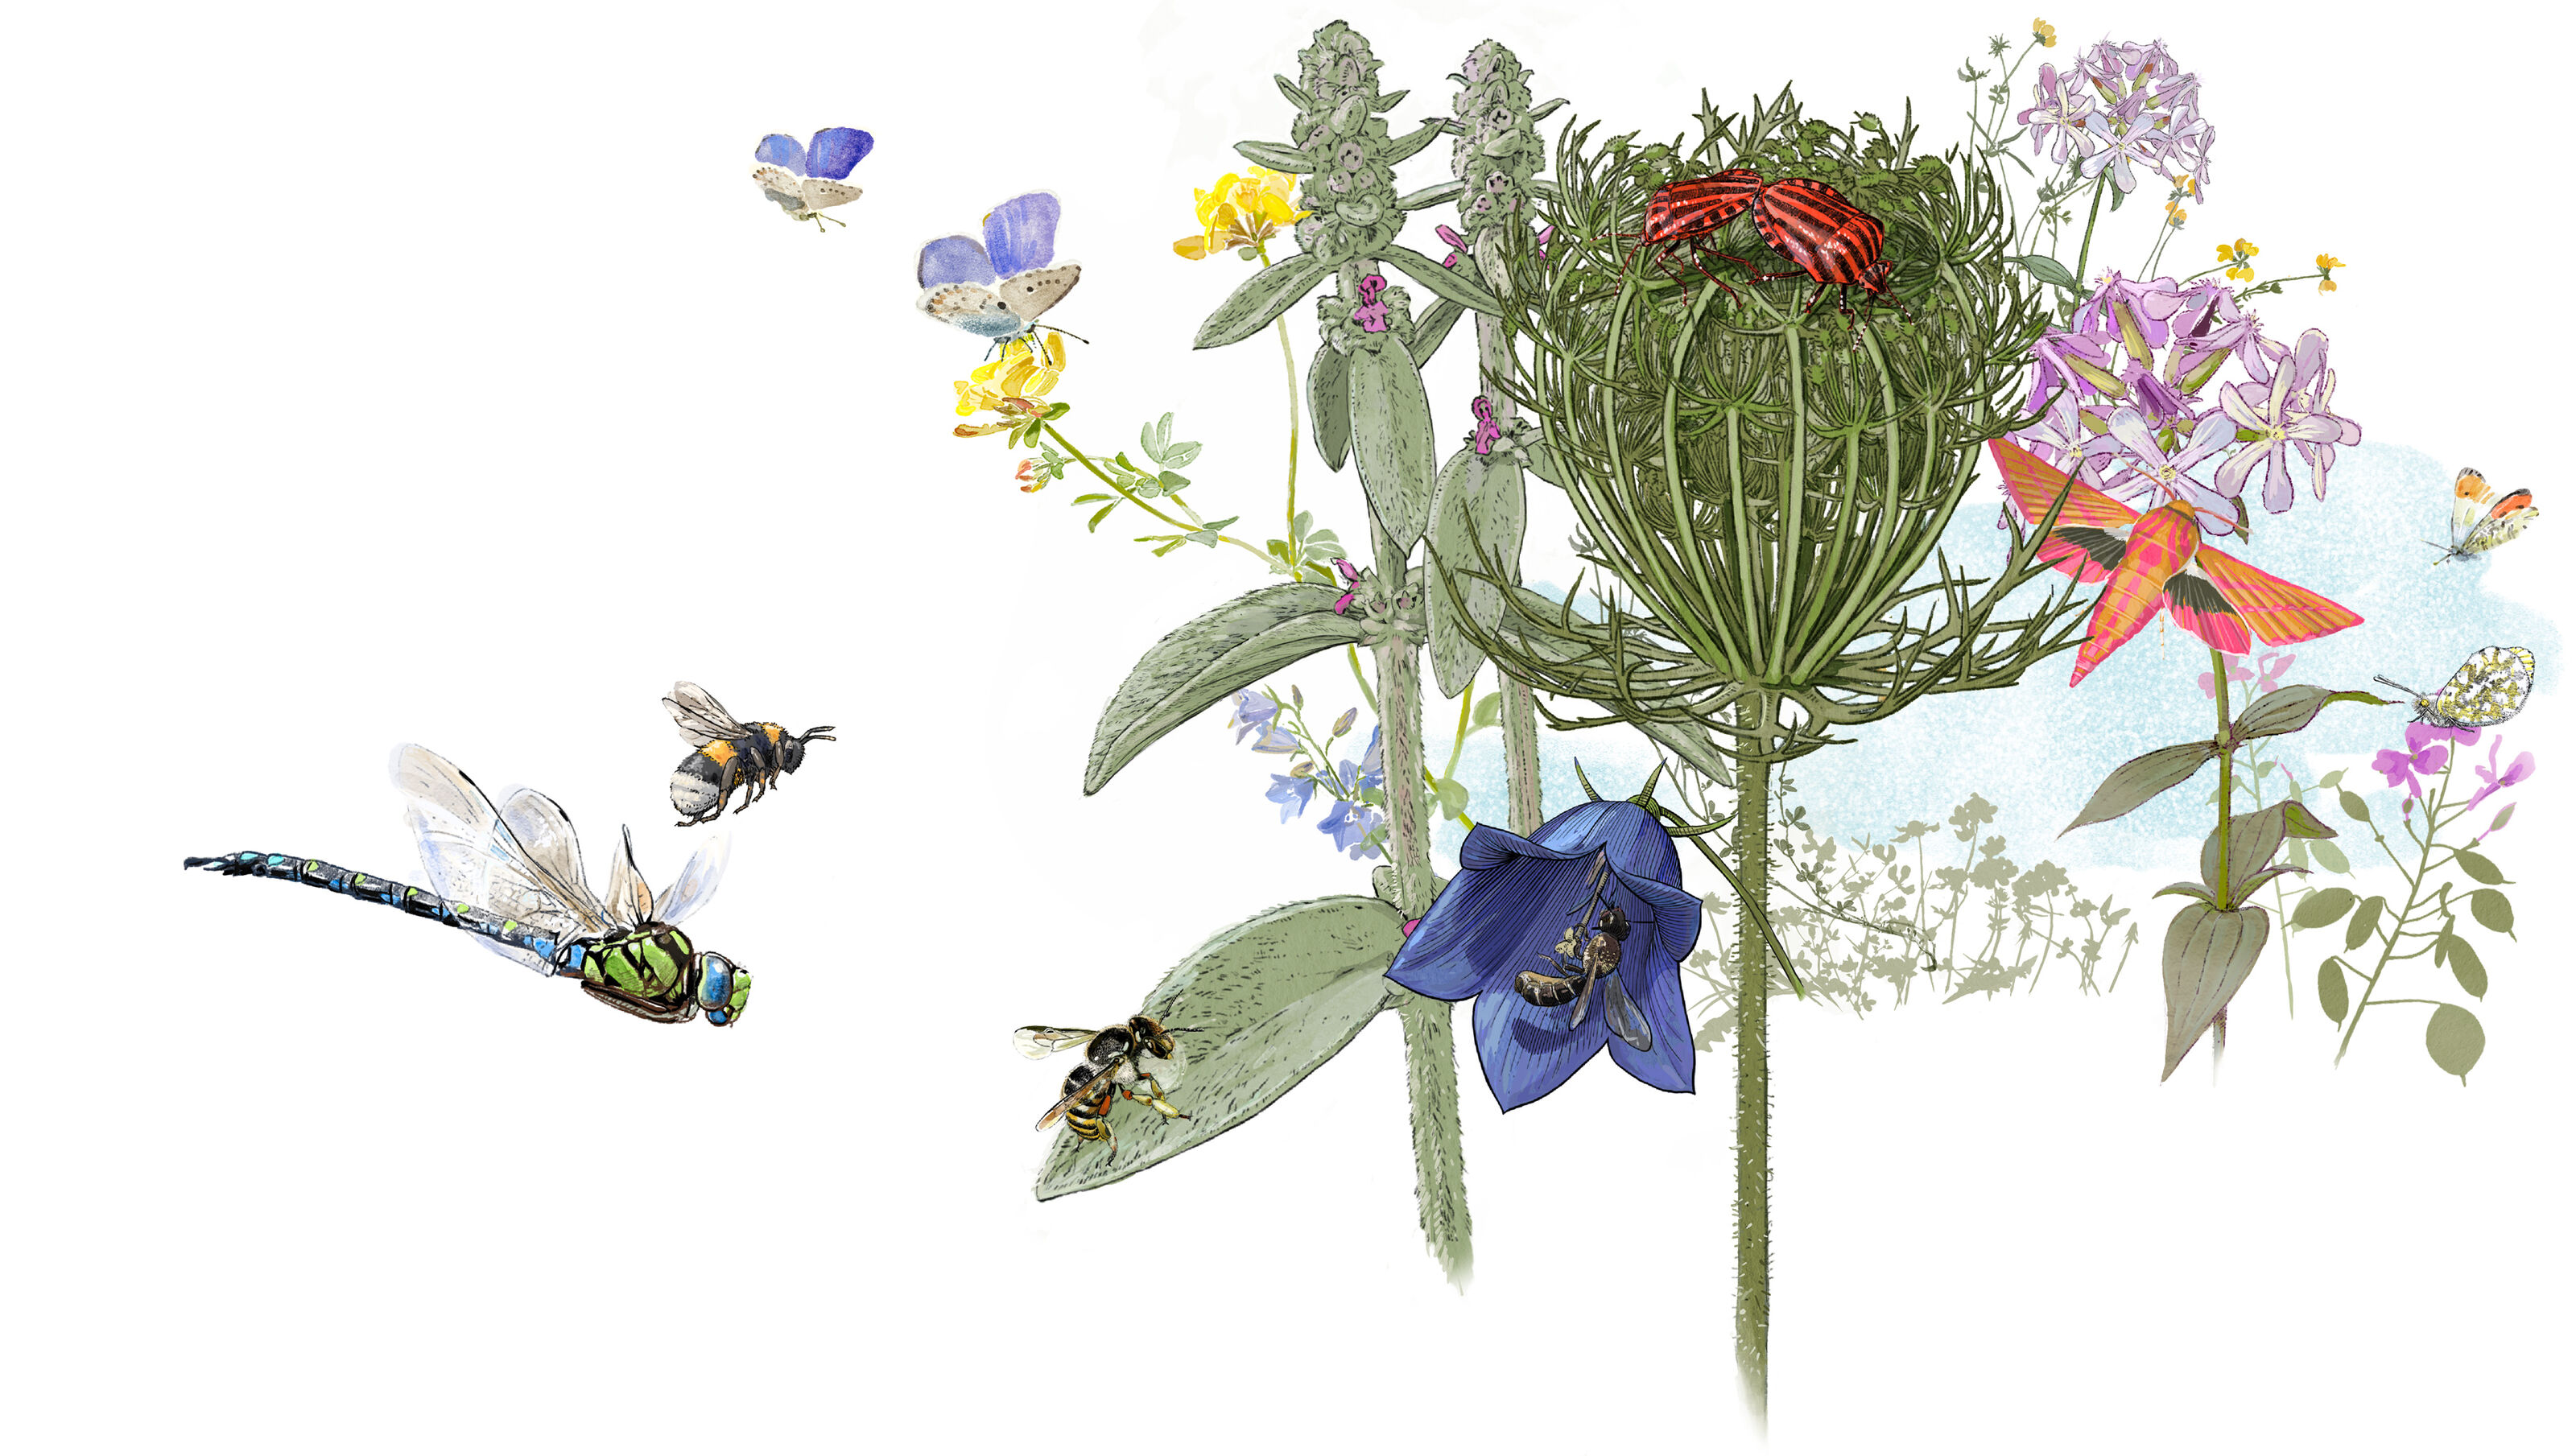 BLKB_Pflanzen-Tiere_InsekteninGaerten_Biodiversitaet_Huet-morn_bunterhund-Illustration_RGB